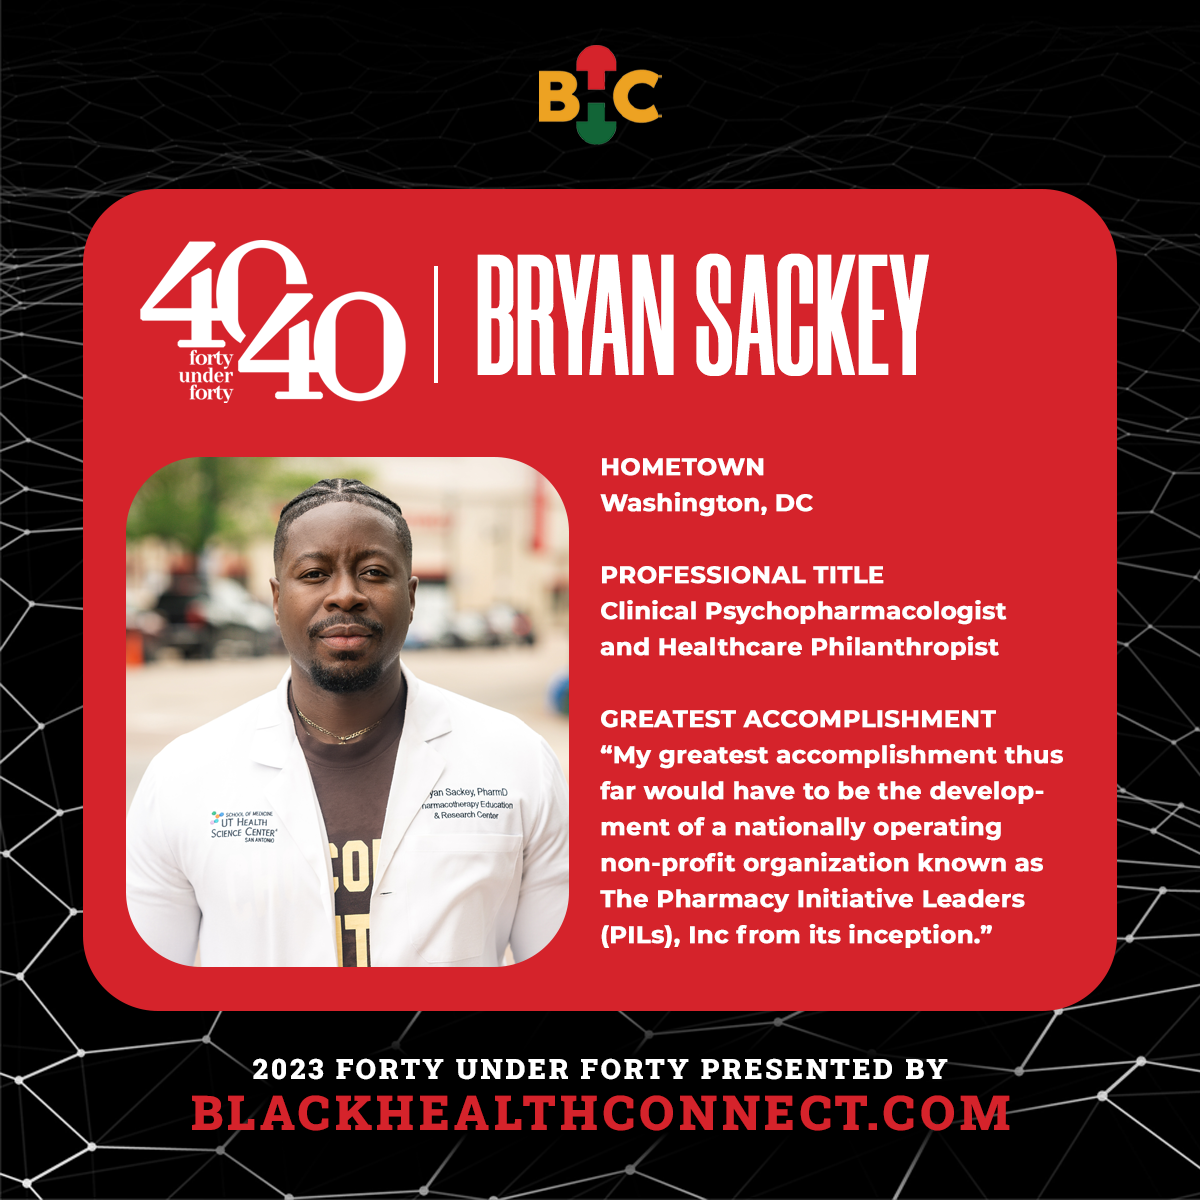 BHC-4040-BryanSackey.png